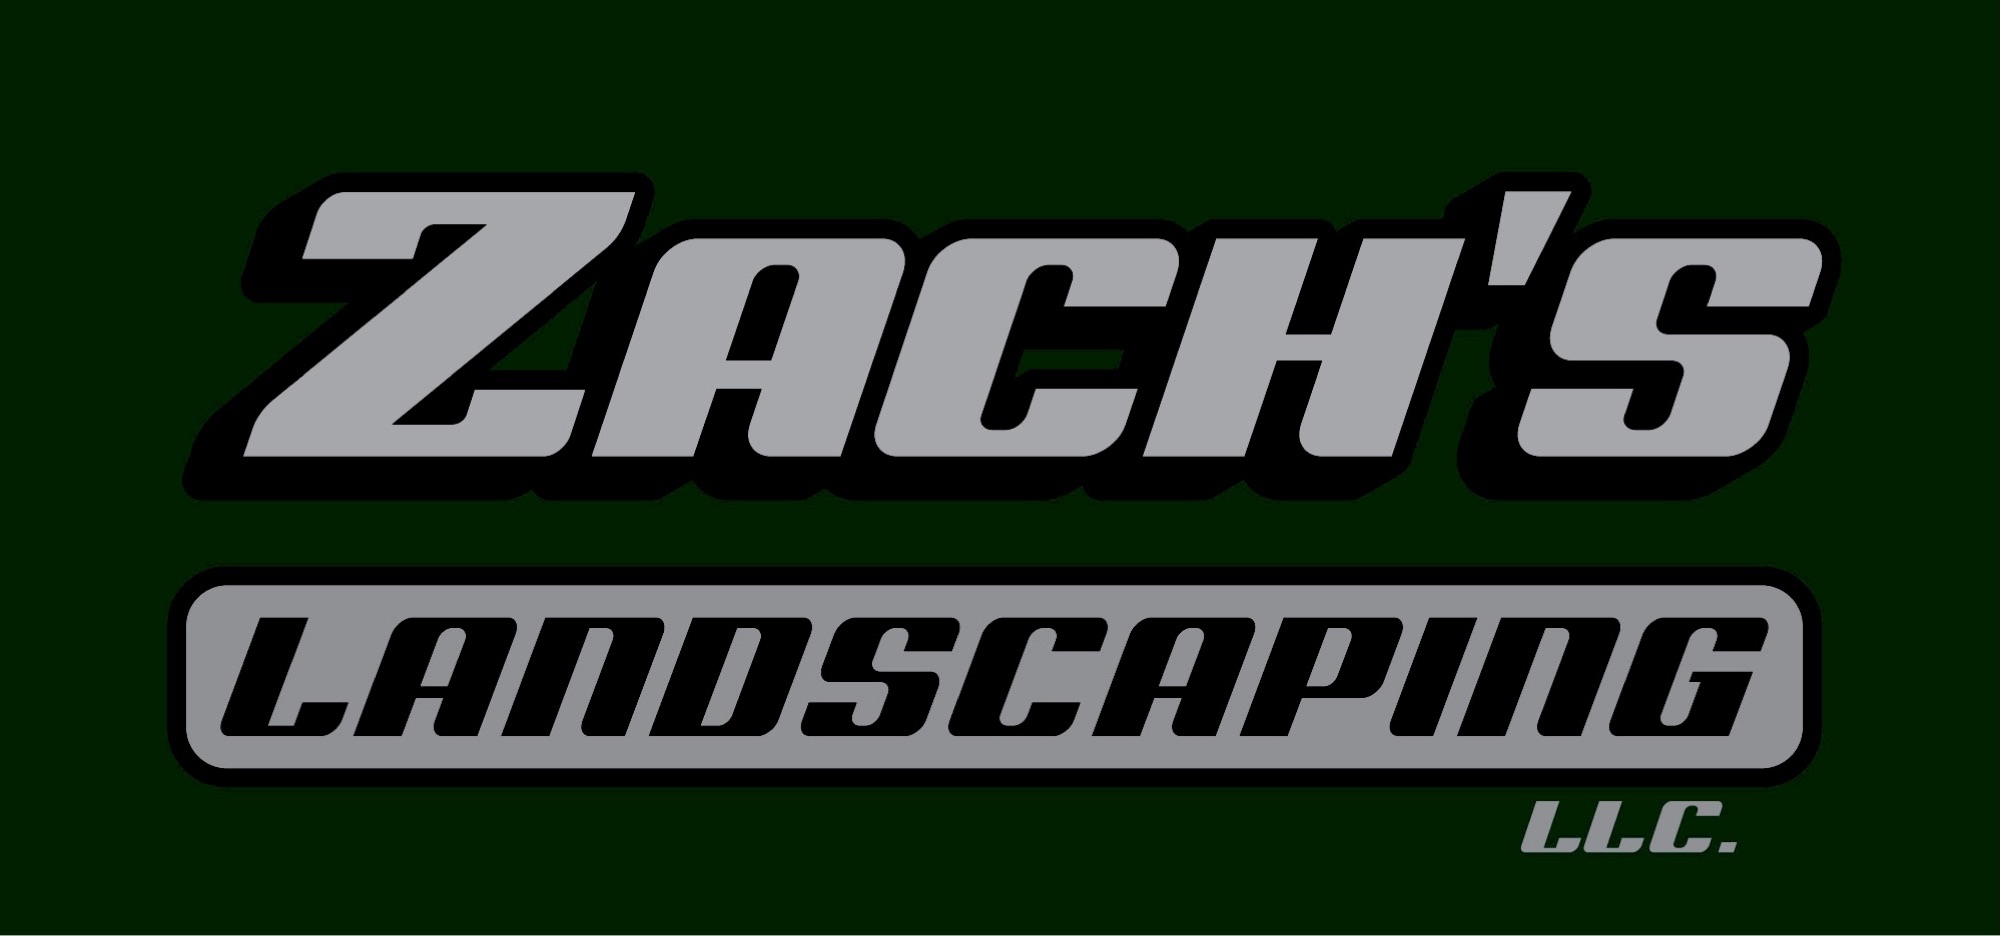 Zach's Landscaping LLC Logo